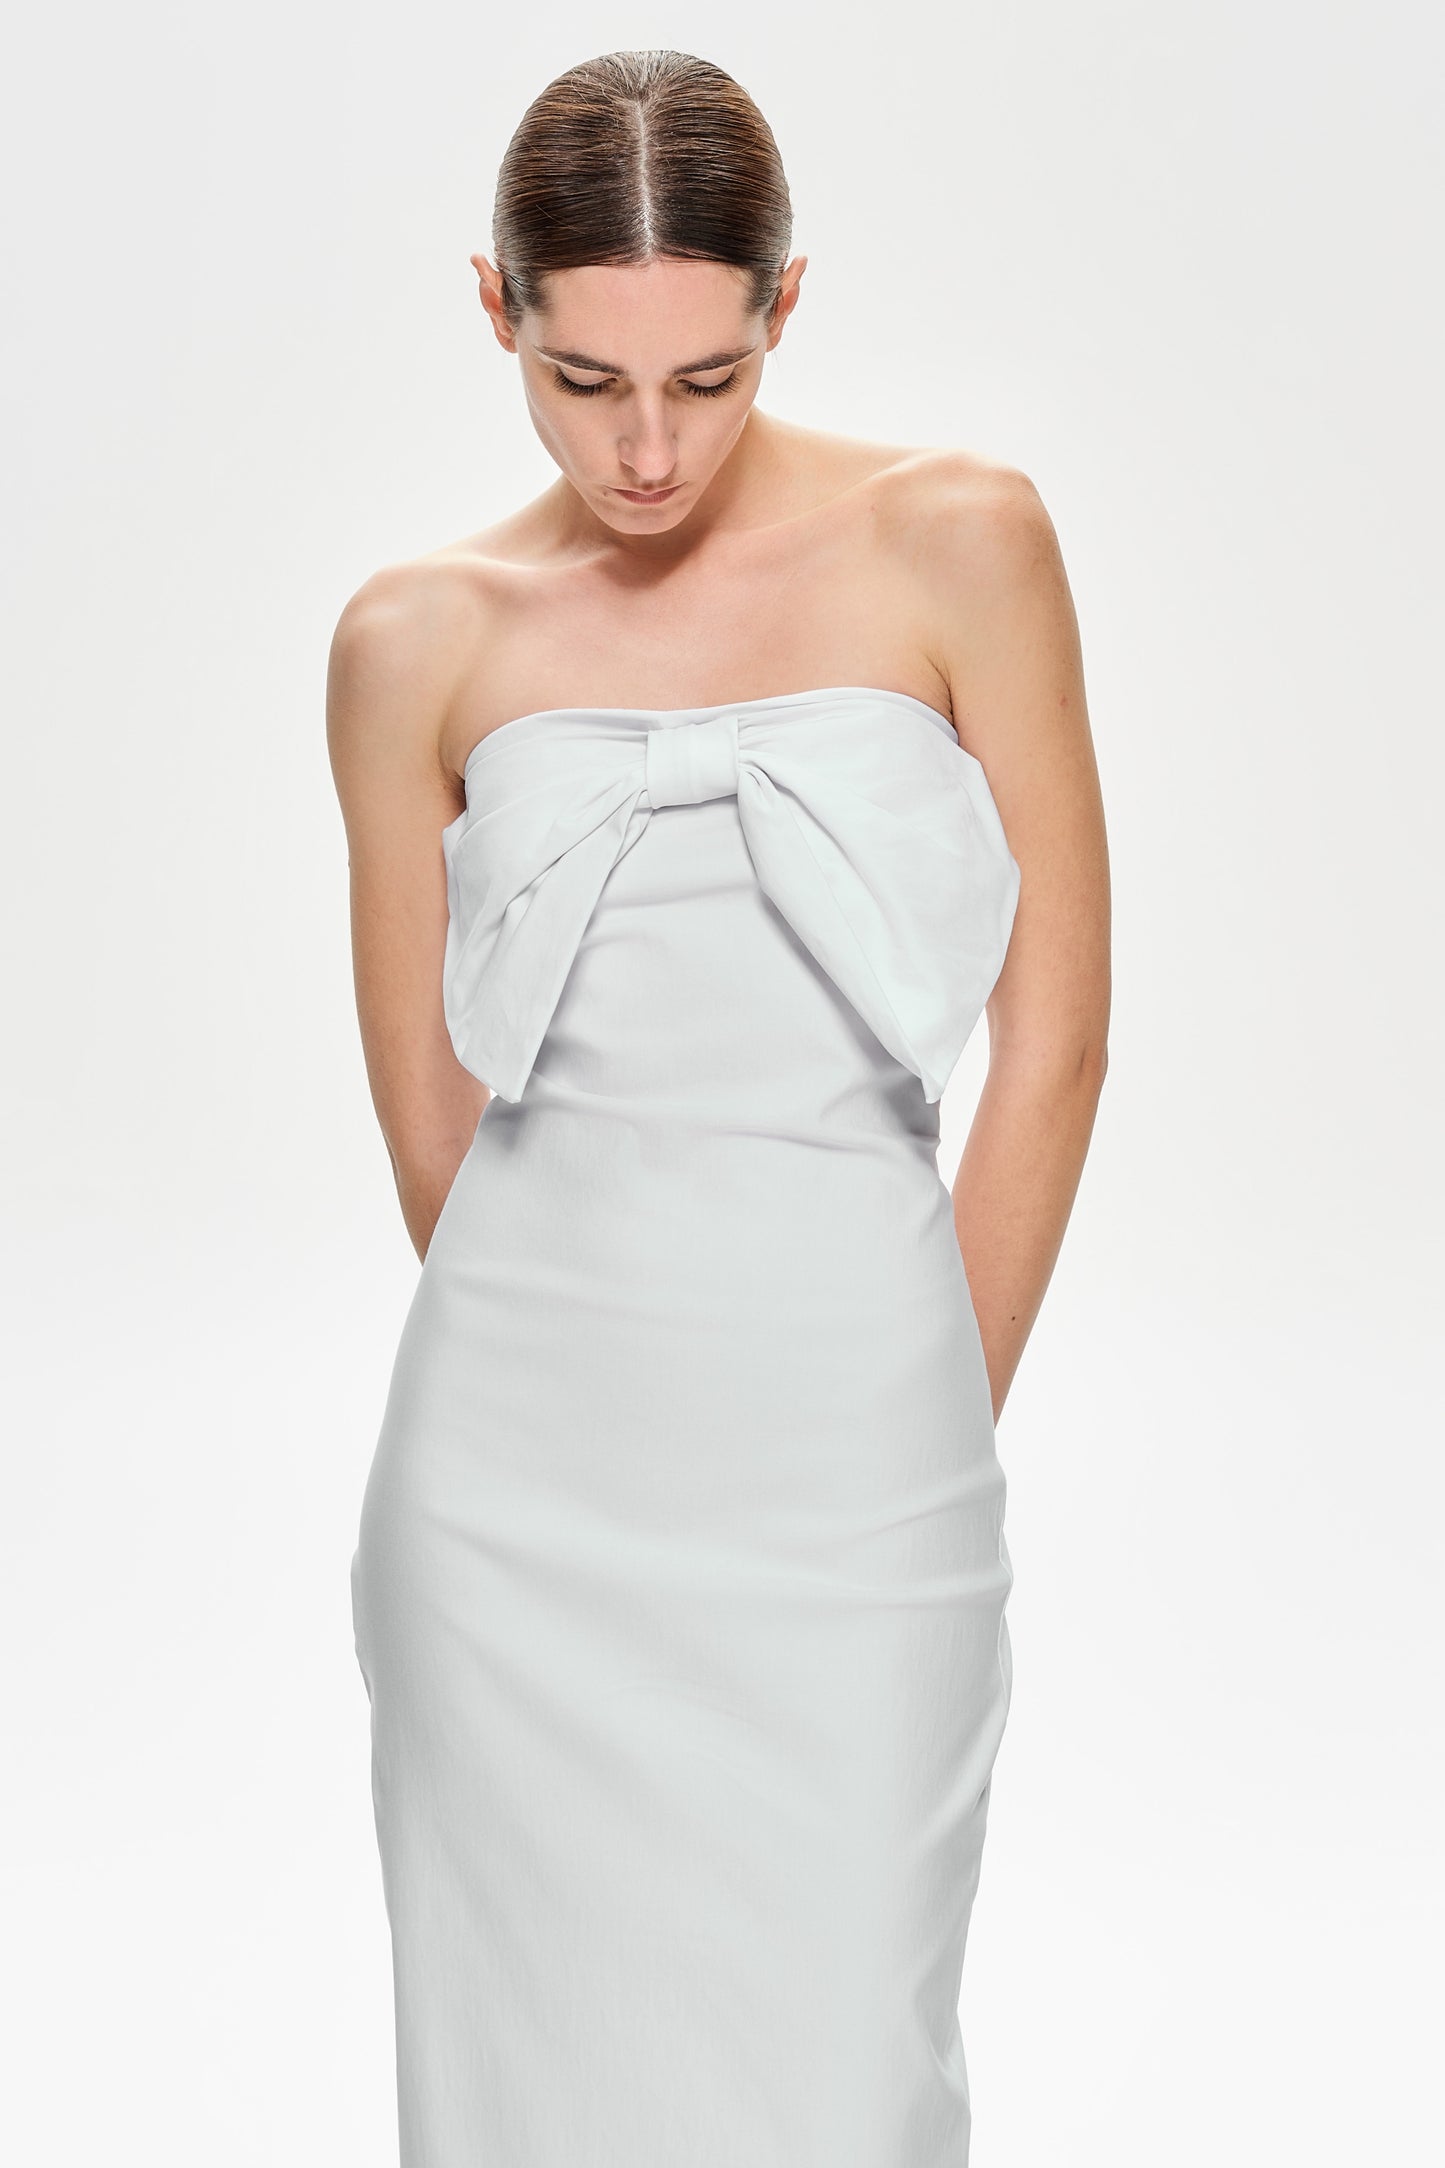 Bow strapless white dress